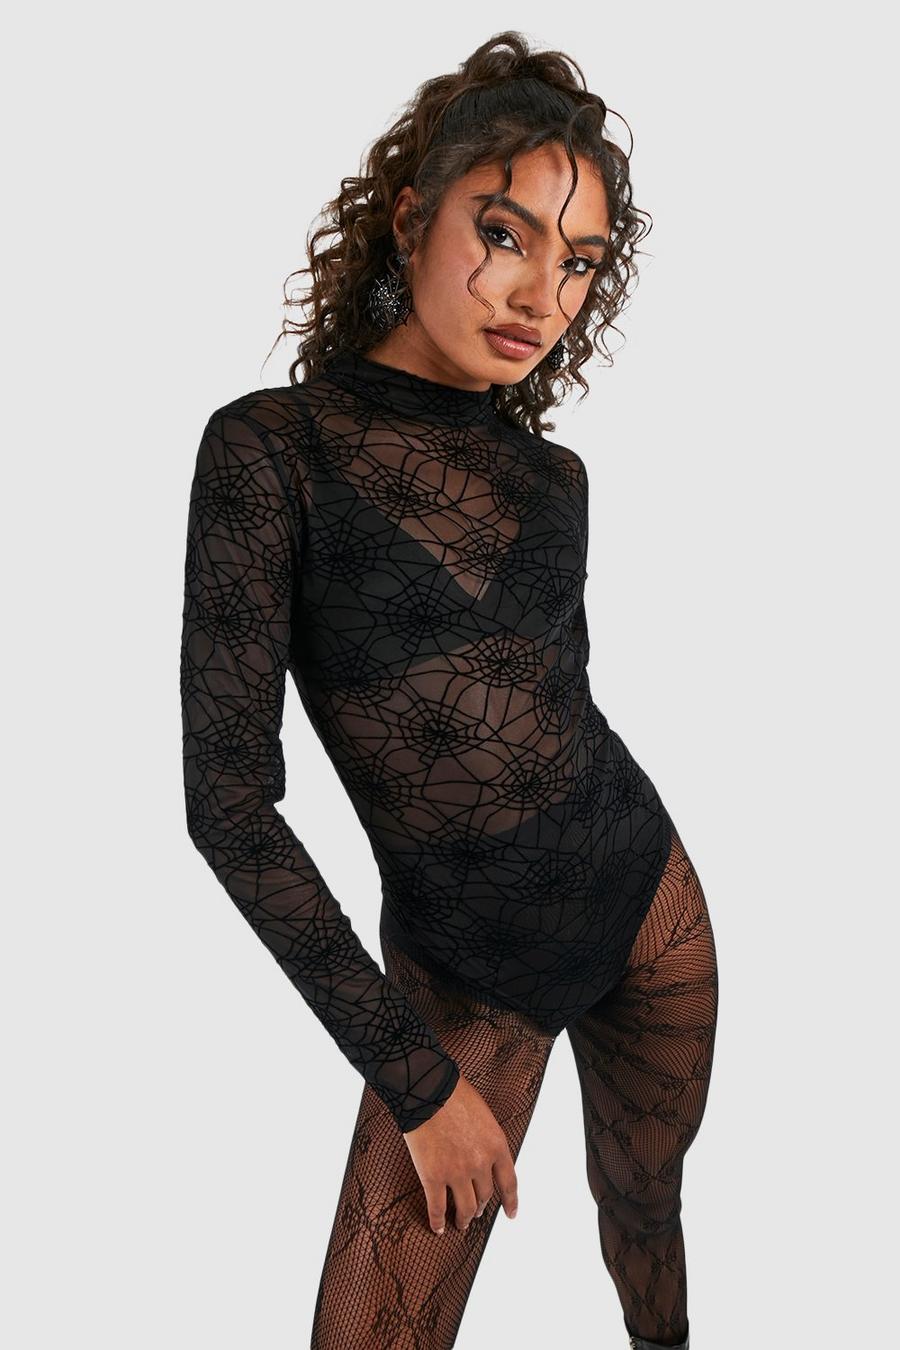 https://media.boohoo.com/i/boohoo/tzz98287_black_xl/female-black-tall-maisie-halloween-spider-web-mesh-bodysuit/?w=900&qlt=default&fmt.jp2.qlt=70&fmt=auto&sm=fit